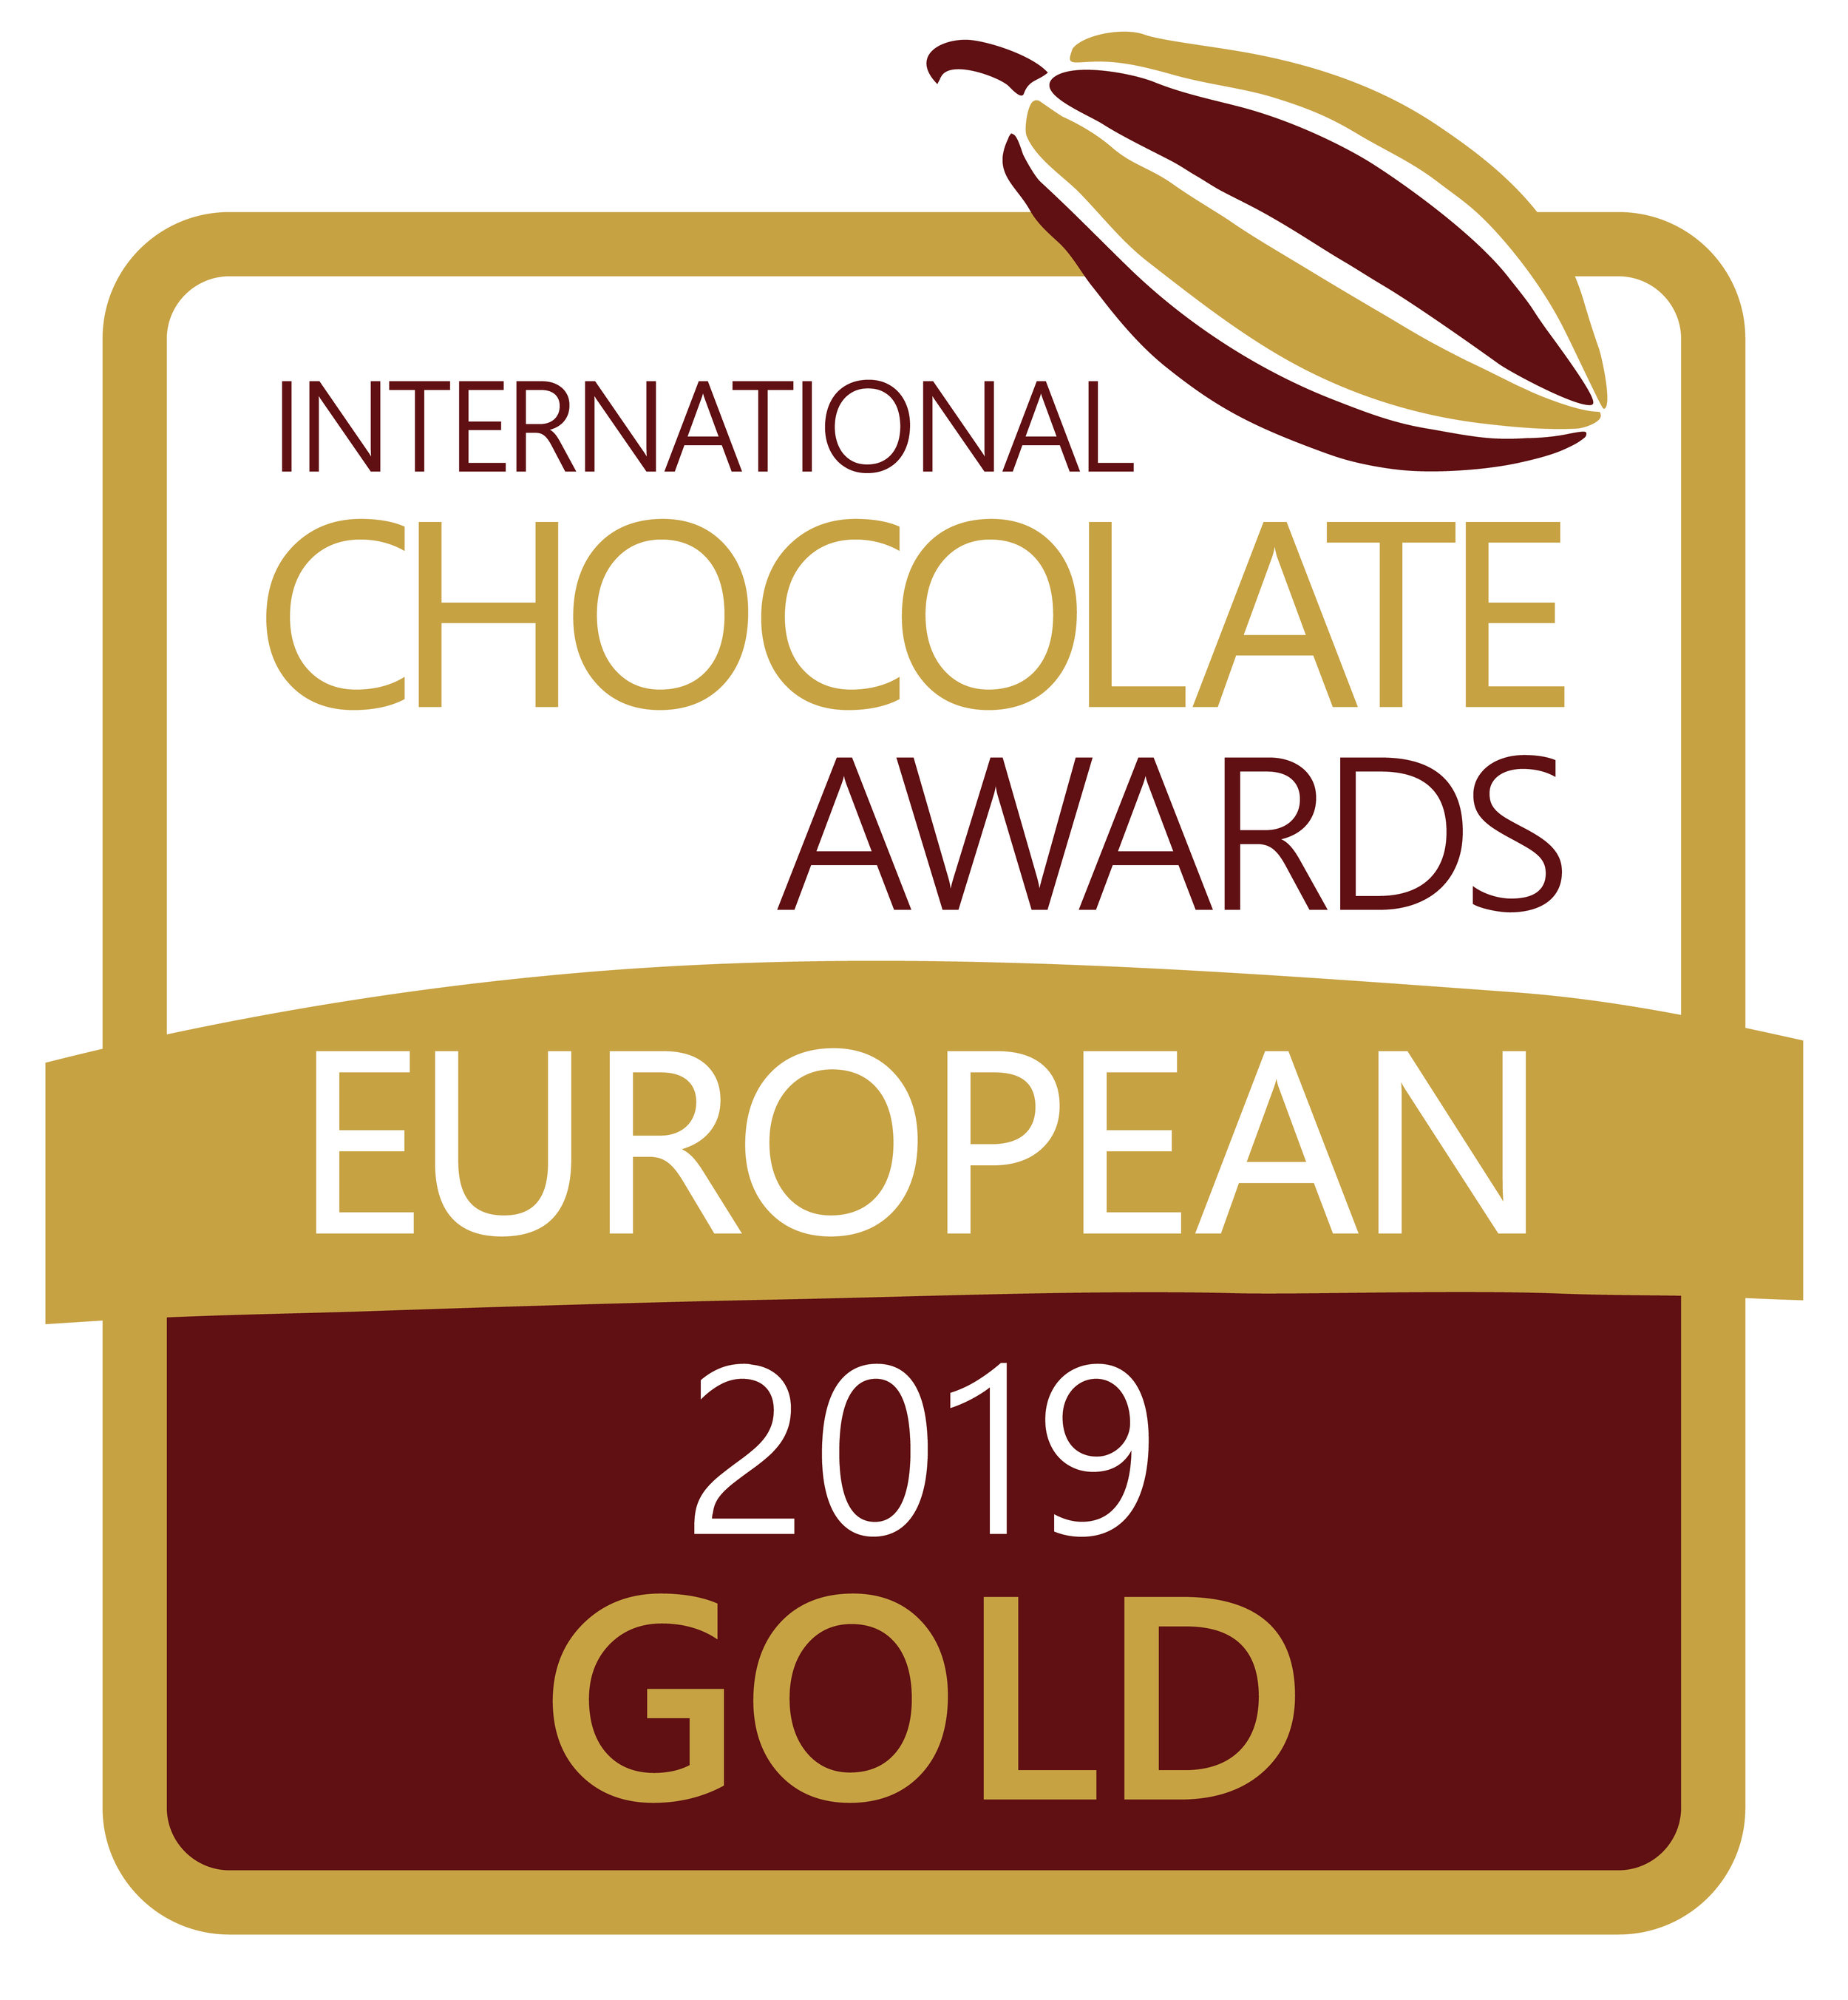 ica-prize-logo-2019-gold-euro-rgb.jpg